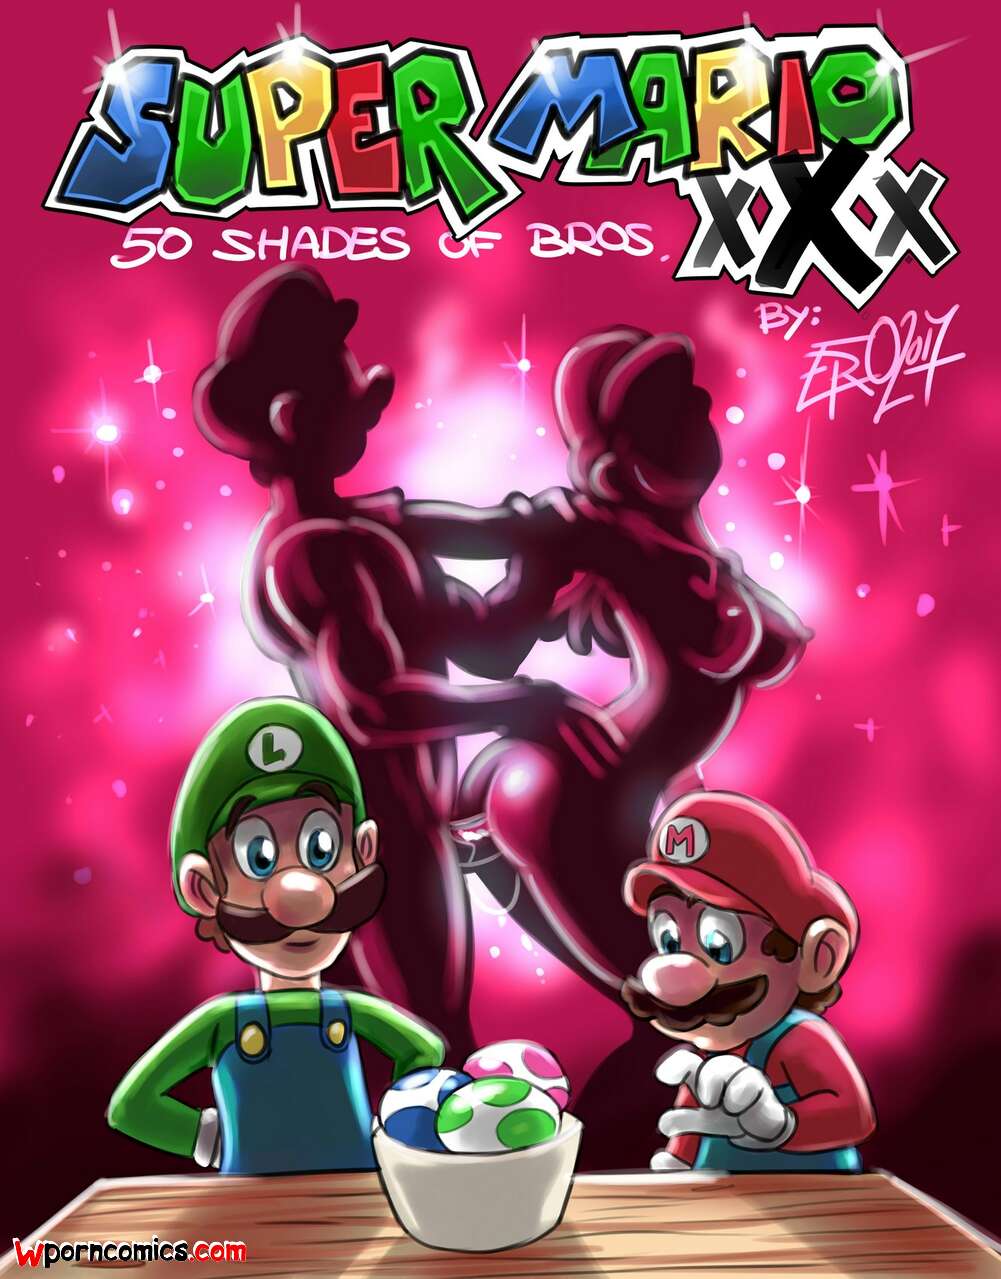 Xxxbd Er O - âœ…ï¸ Porn comic Super Mario xXx. 50 Shades of Bros. Psicoero. Sex comic of  the brothers | Porn comics in English for adults only | sexkomix2.com